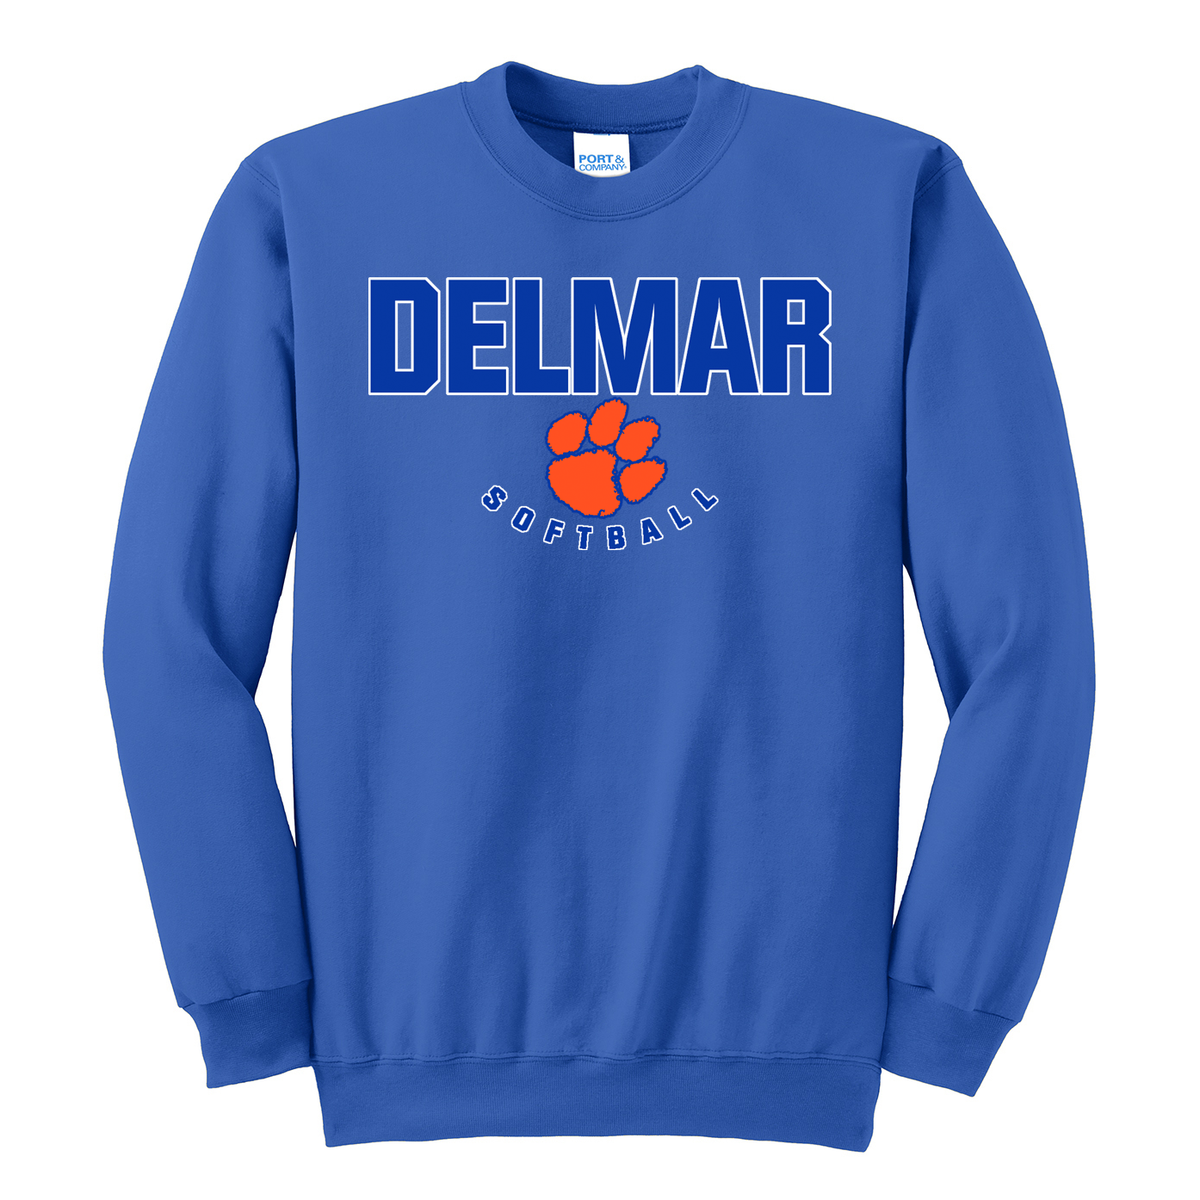 Delmar Softball  Crew Neck Sweater